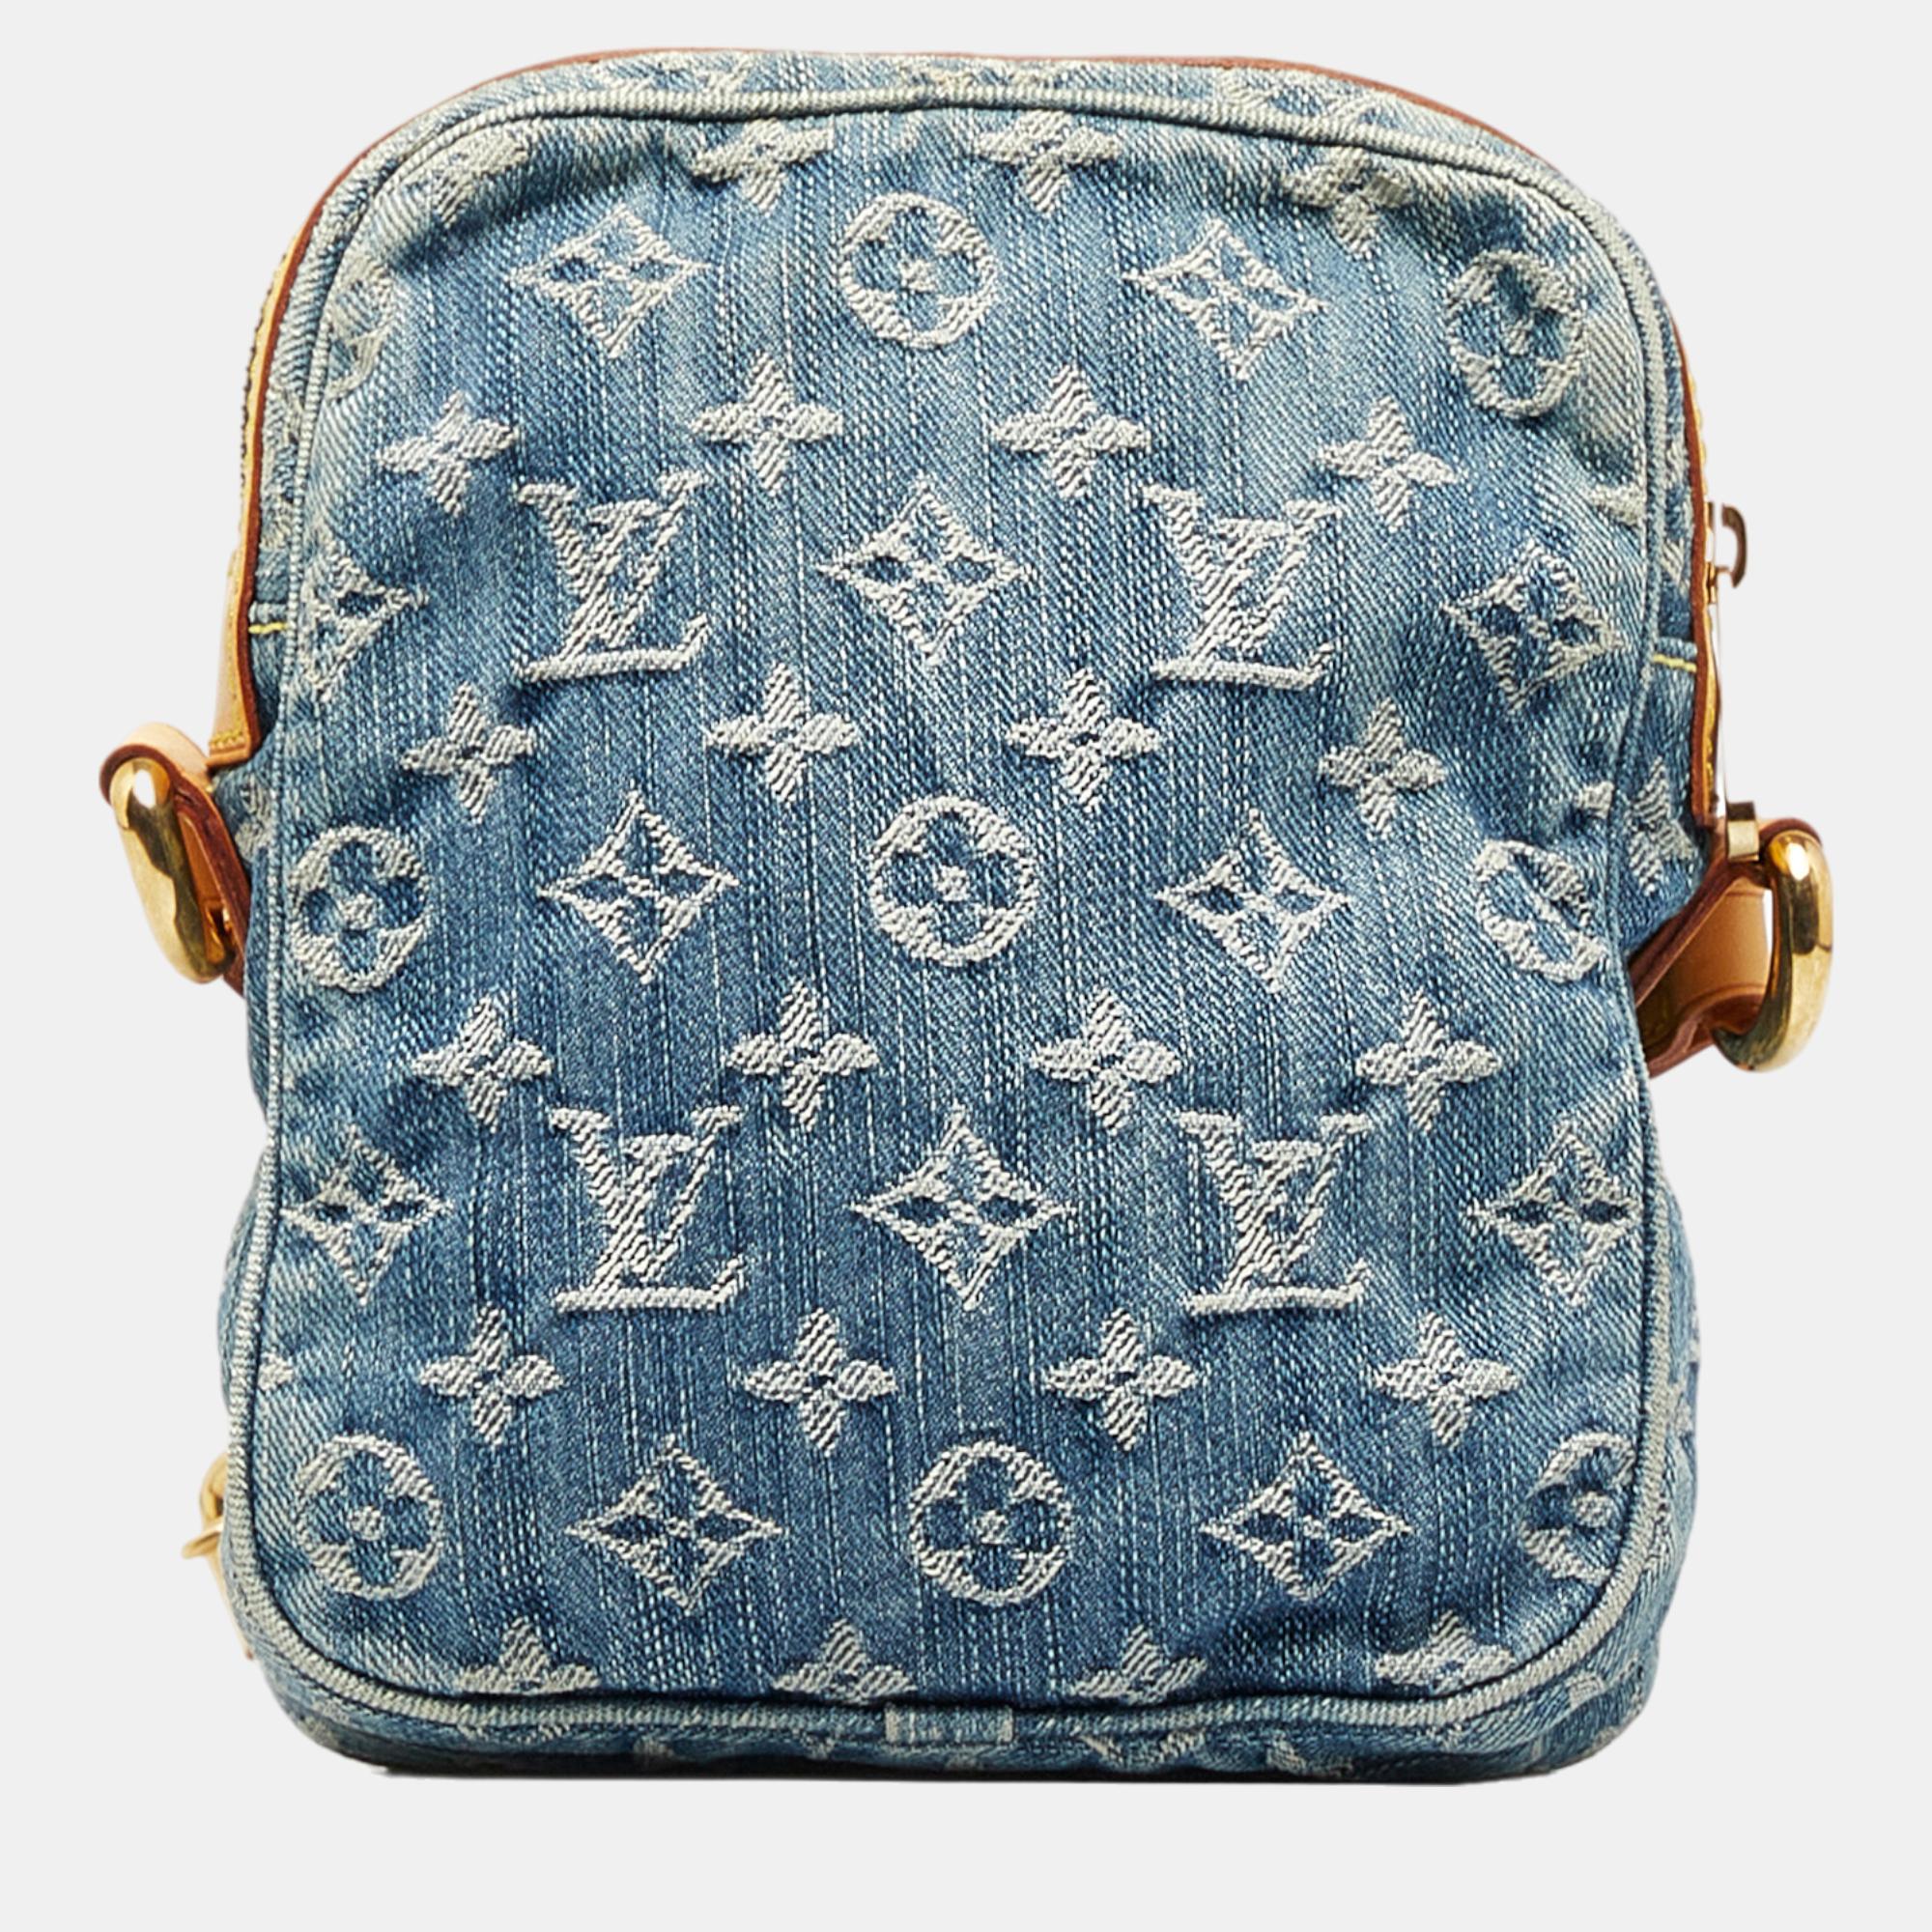 Louis Vuitton Blue Monogram Denim Camera Bag